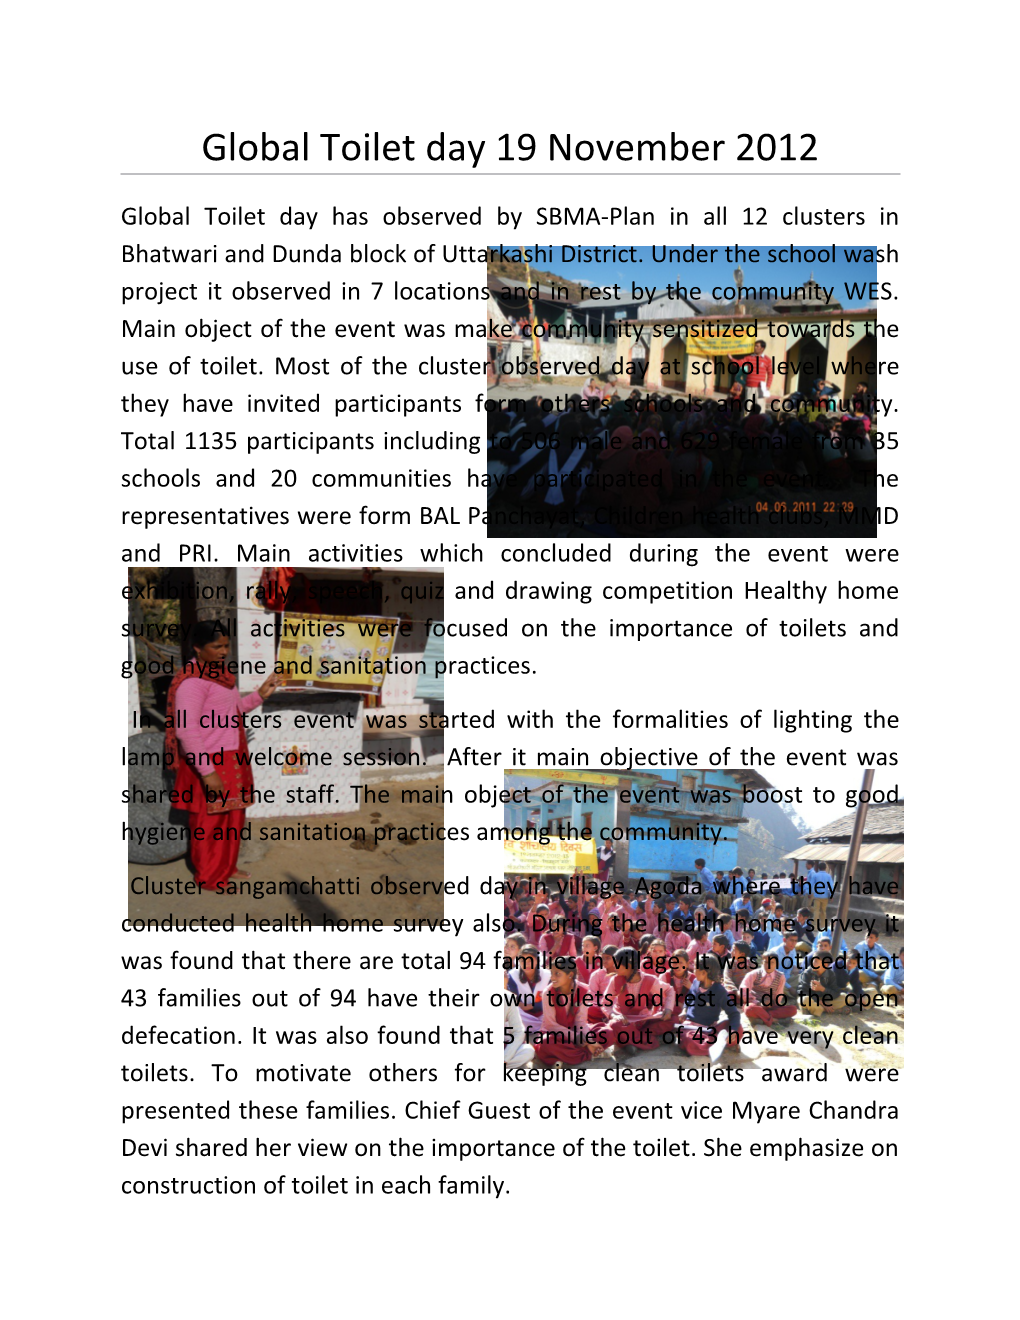 Global Toilet Day 19 November 2012